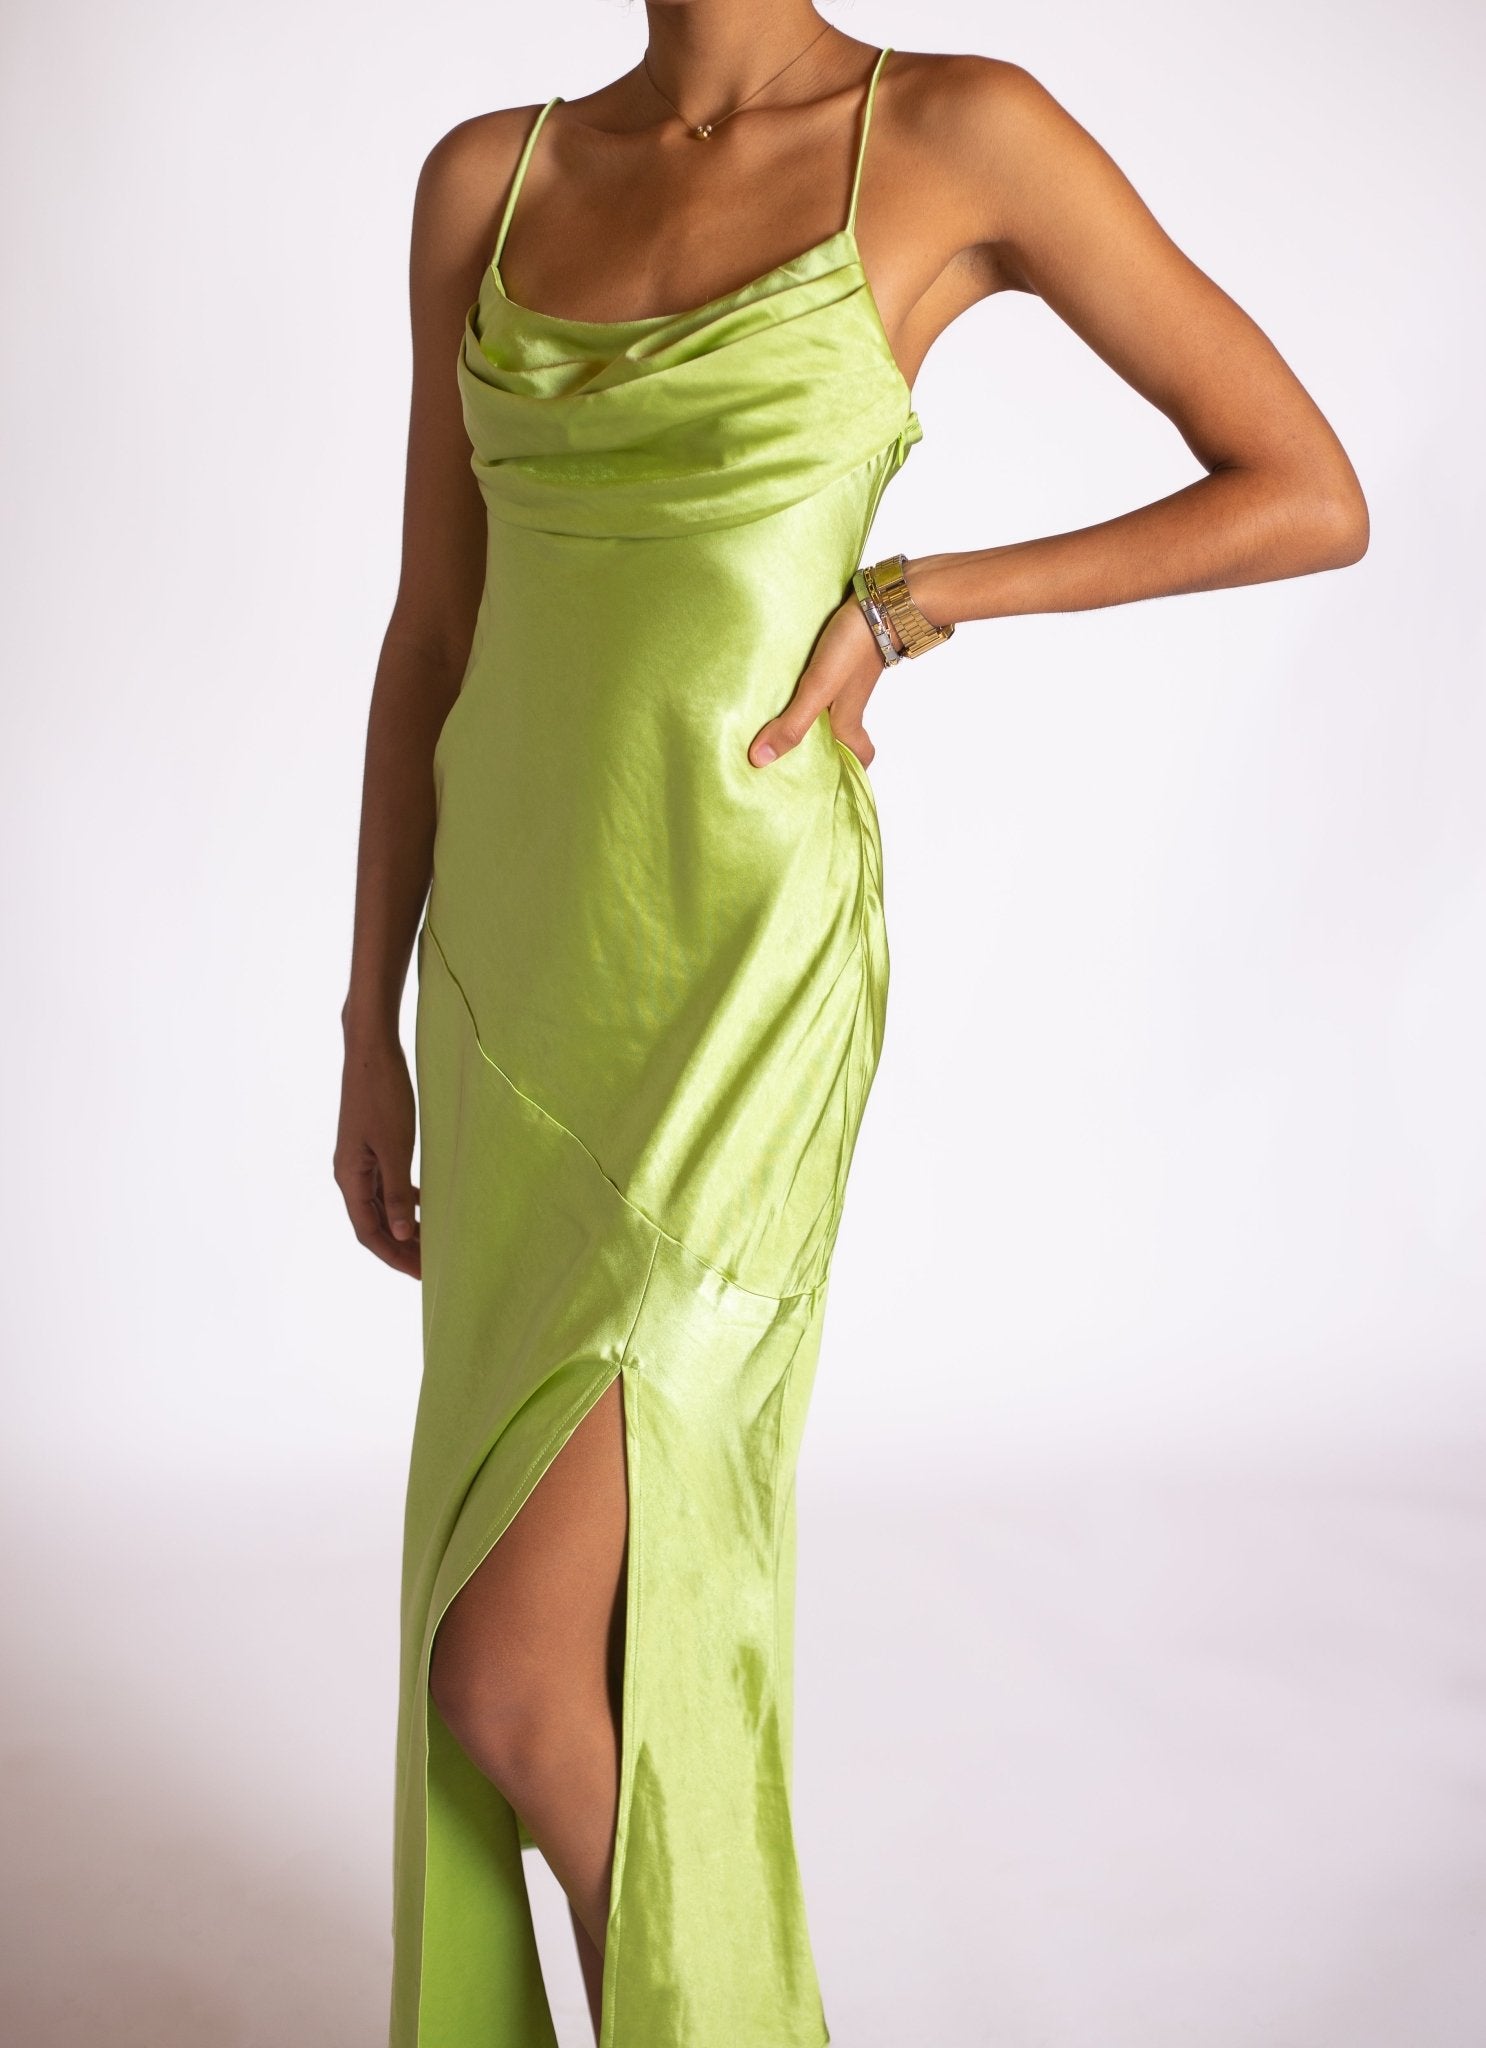 Tabata - verde lima - Cindel vestidos maxi, midi, mini, para toda ocasion, largos, de fiesta, de boda